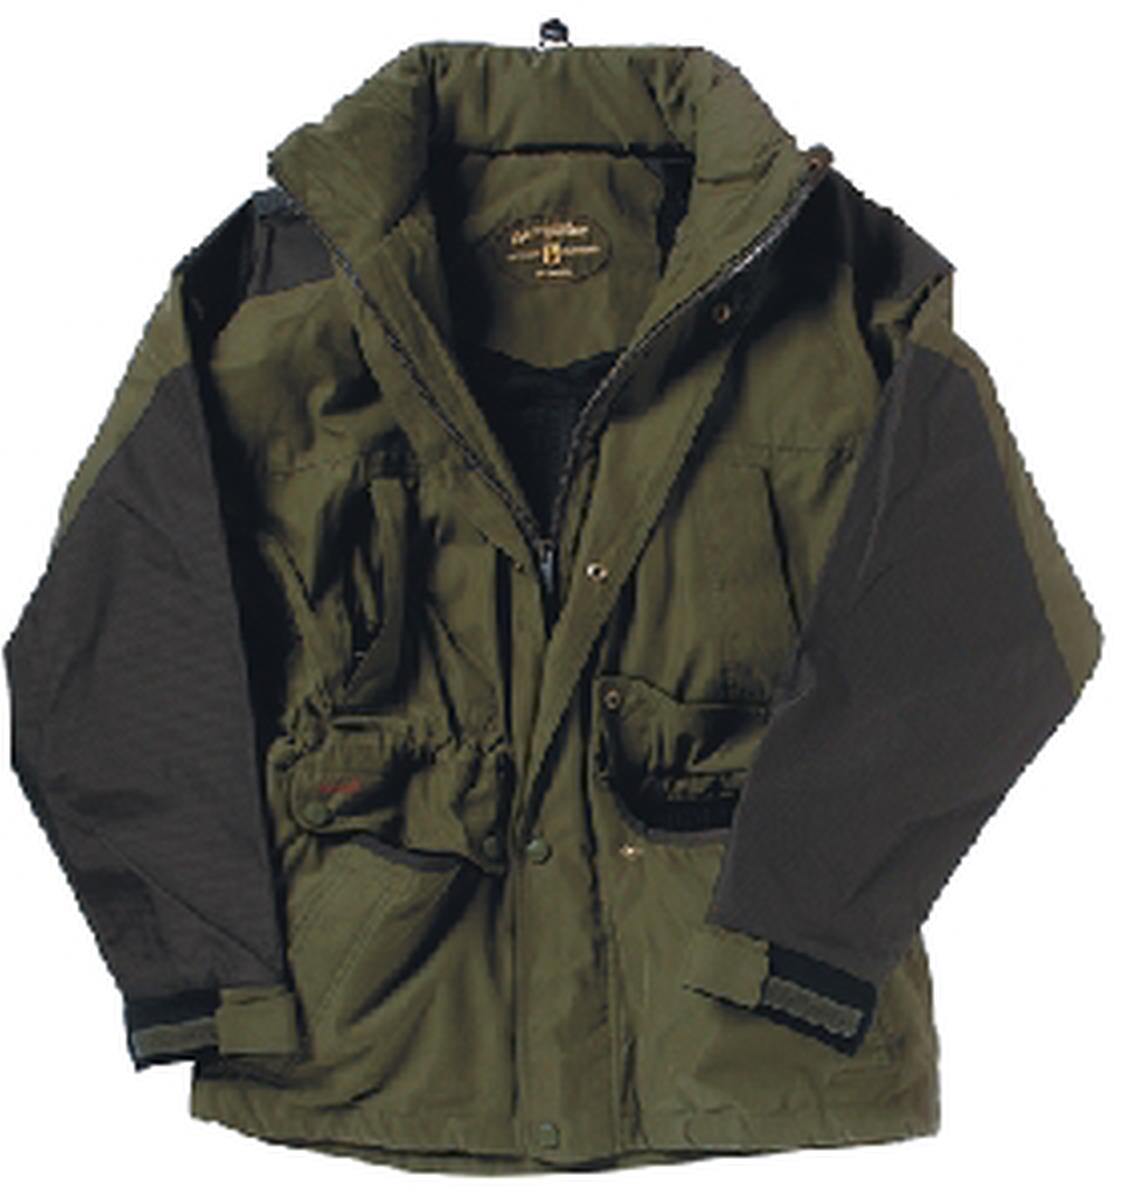 smallville-jacket-with-hitena-5248-1-a3kf_st.jpg